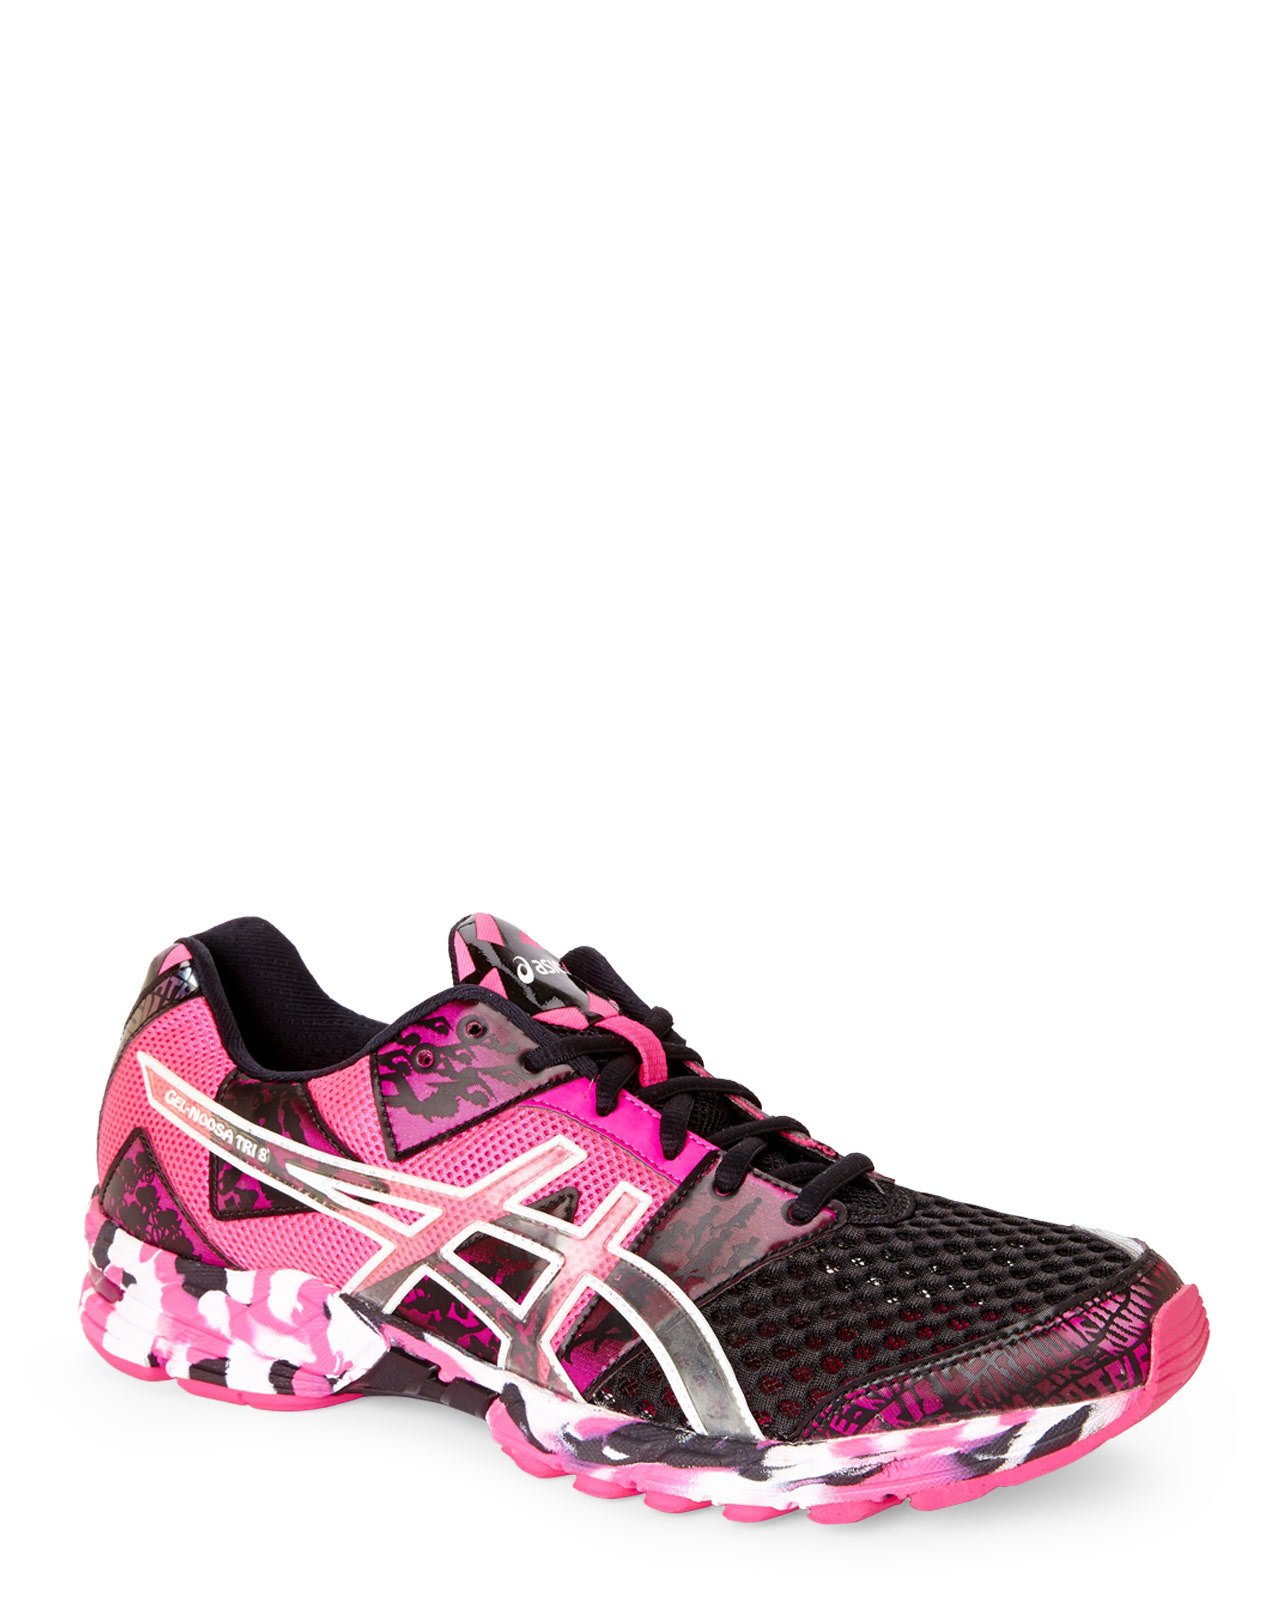 Lyst - Asics Pink & Black Noosa Tri-8 Sneakers in Pink